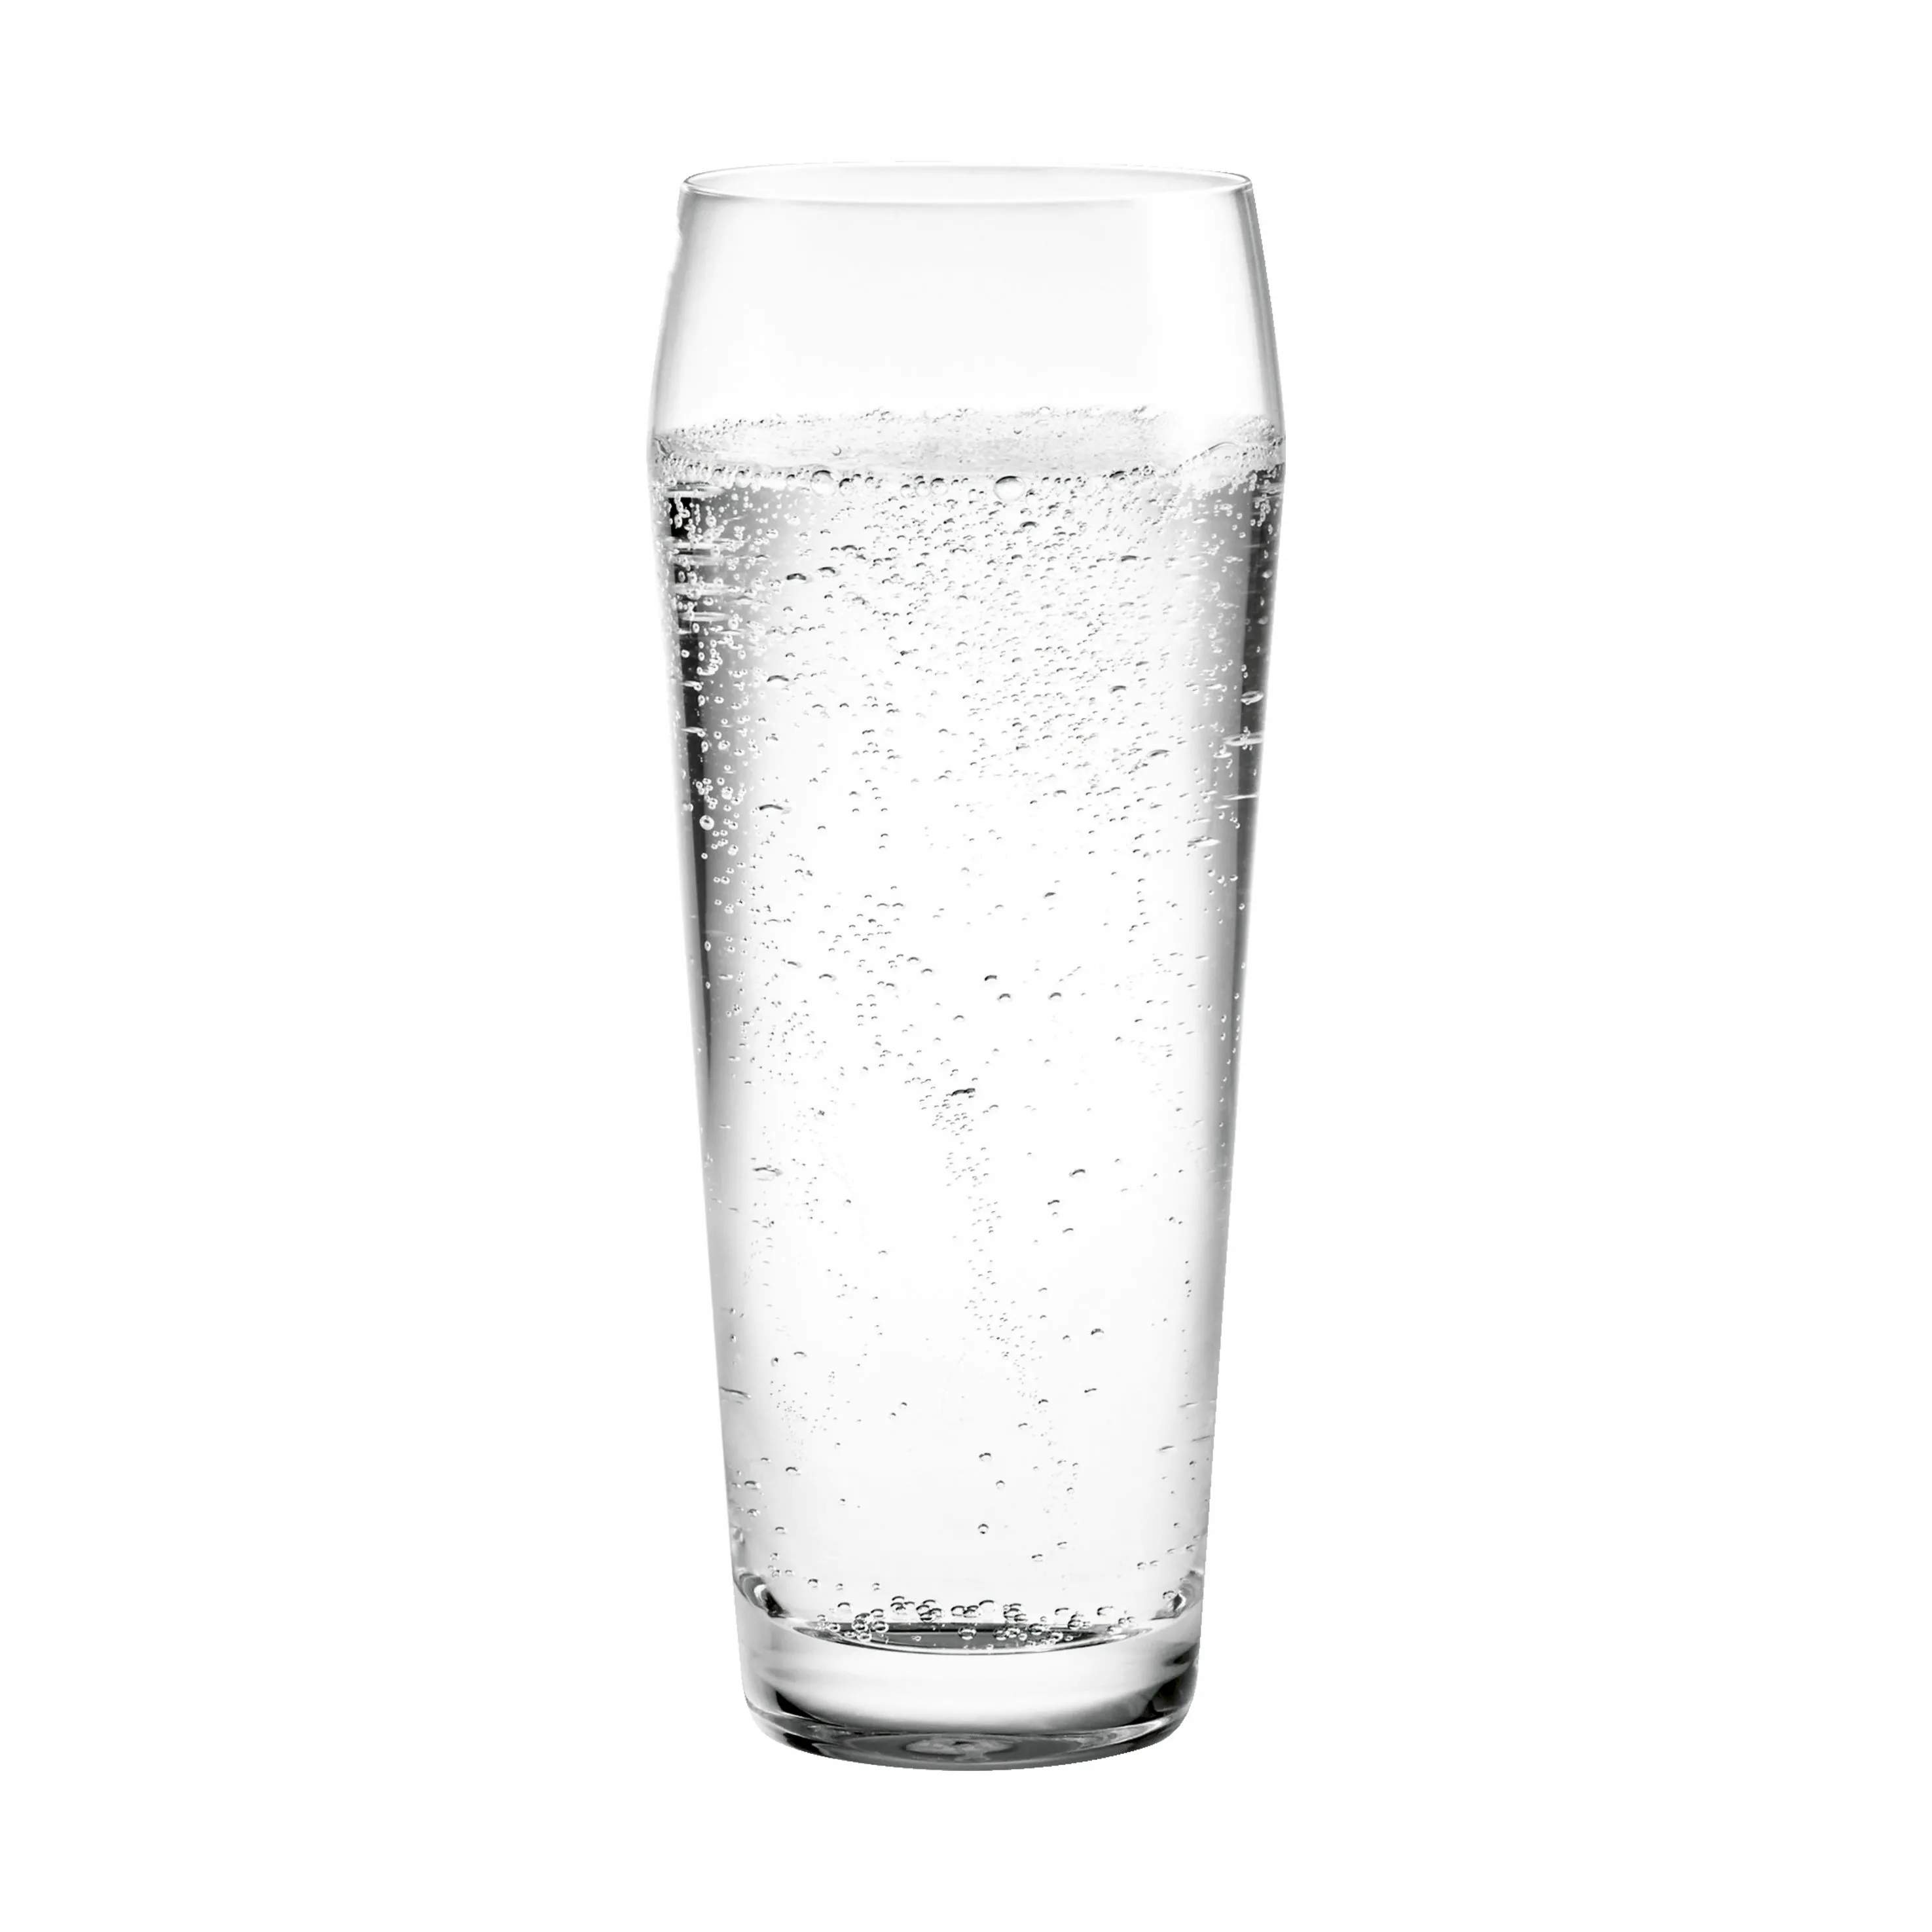 Perfection Vandglas, klar, large